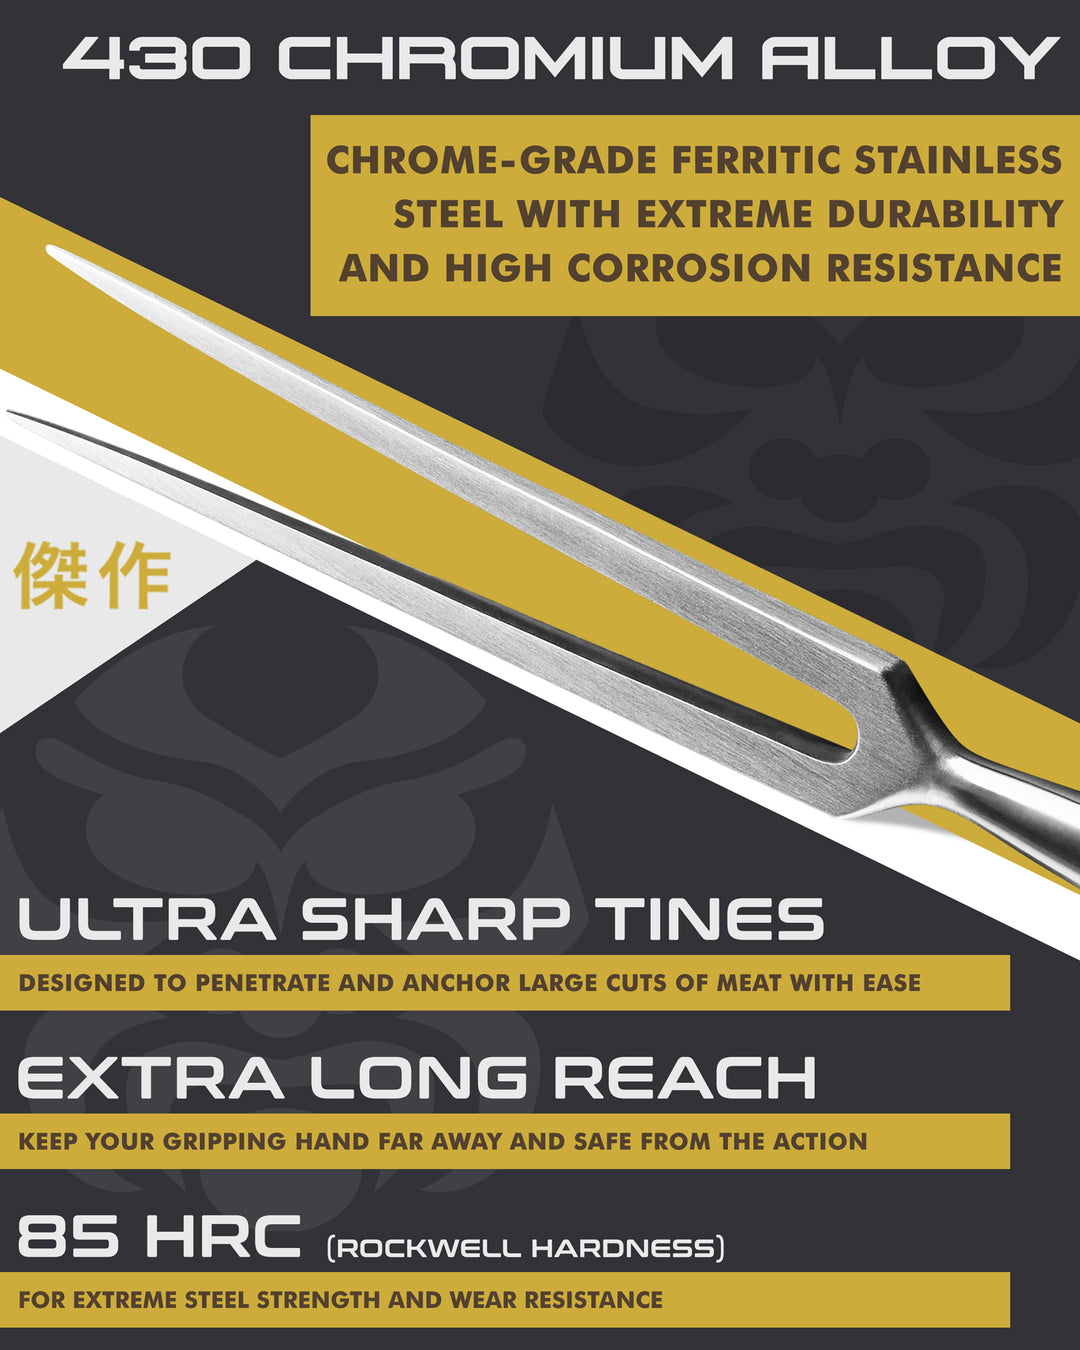 Kessaku Samurai Carving Fork features 430 Chromium Alloy steel, 85 HRC, ultra-sharp tines